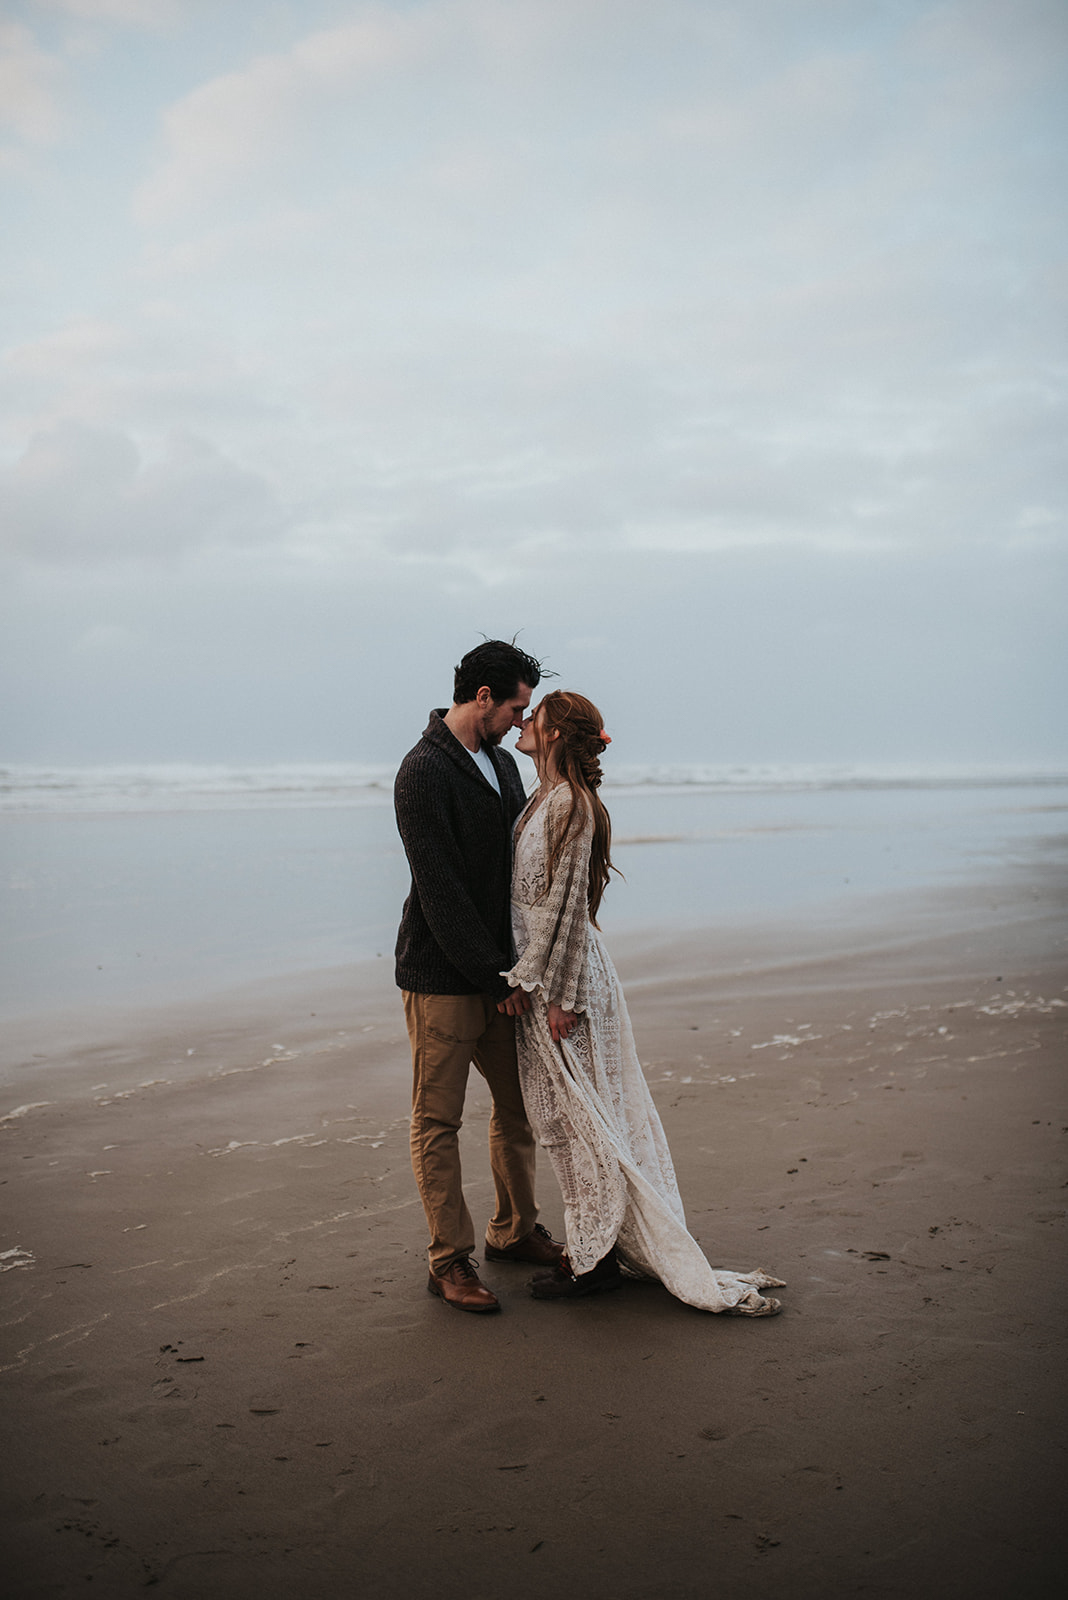 An Intimate Oregon Coast Elopement | Something Blue Weddings